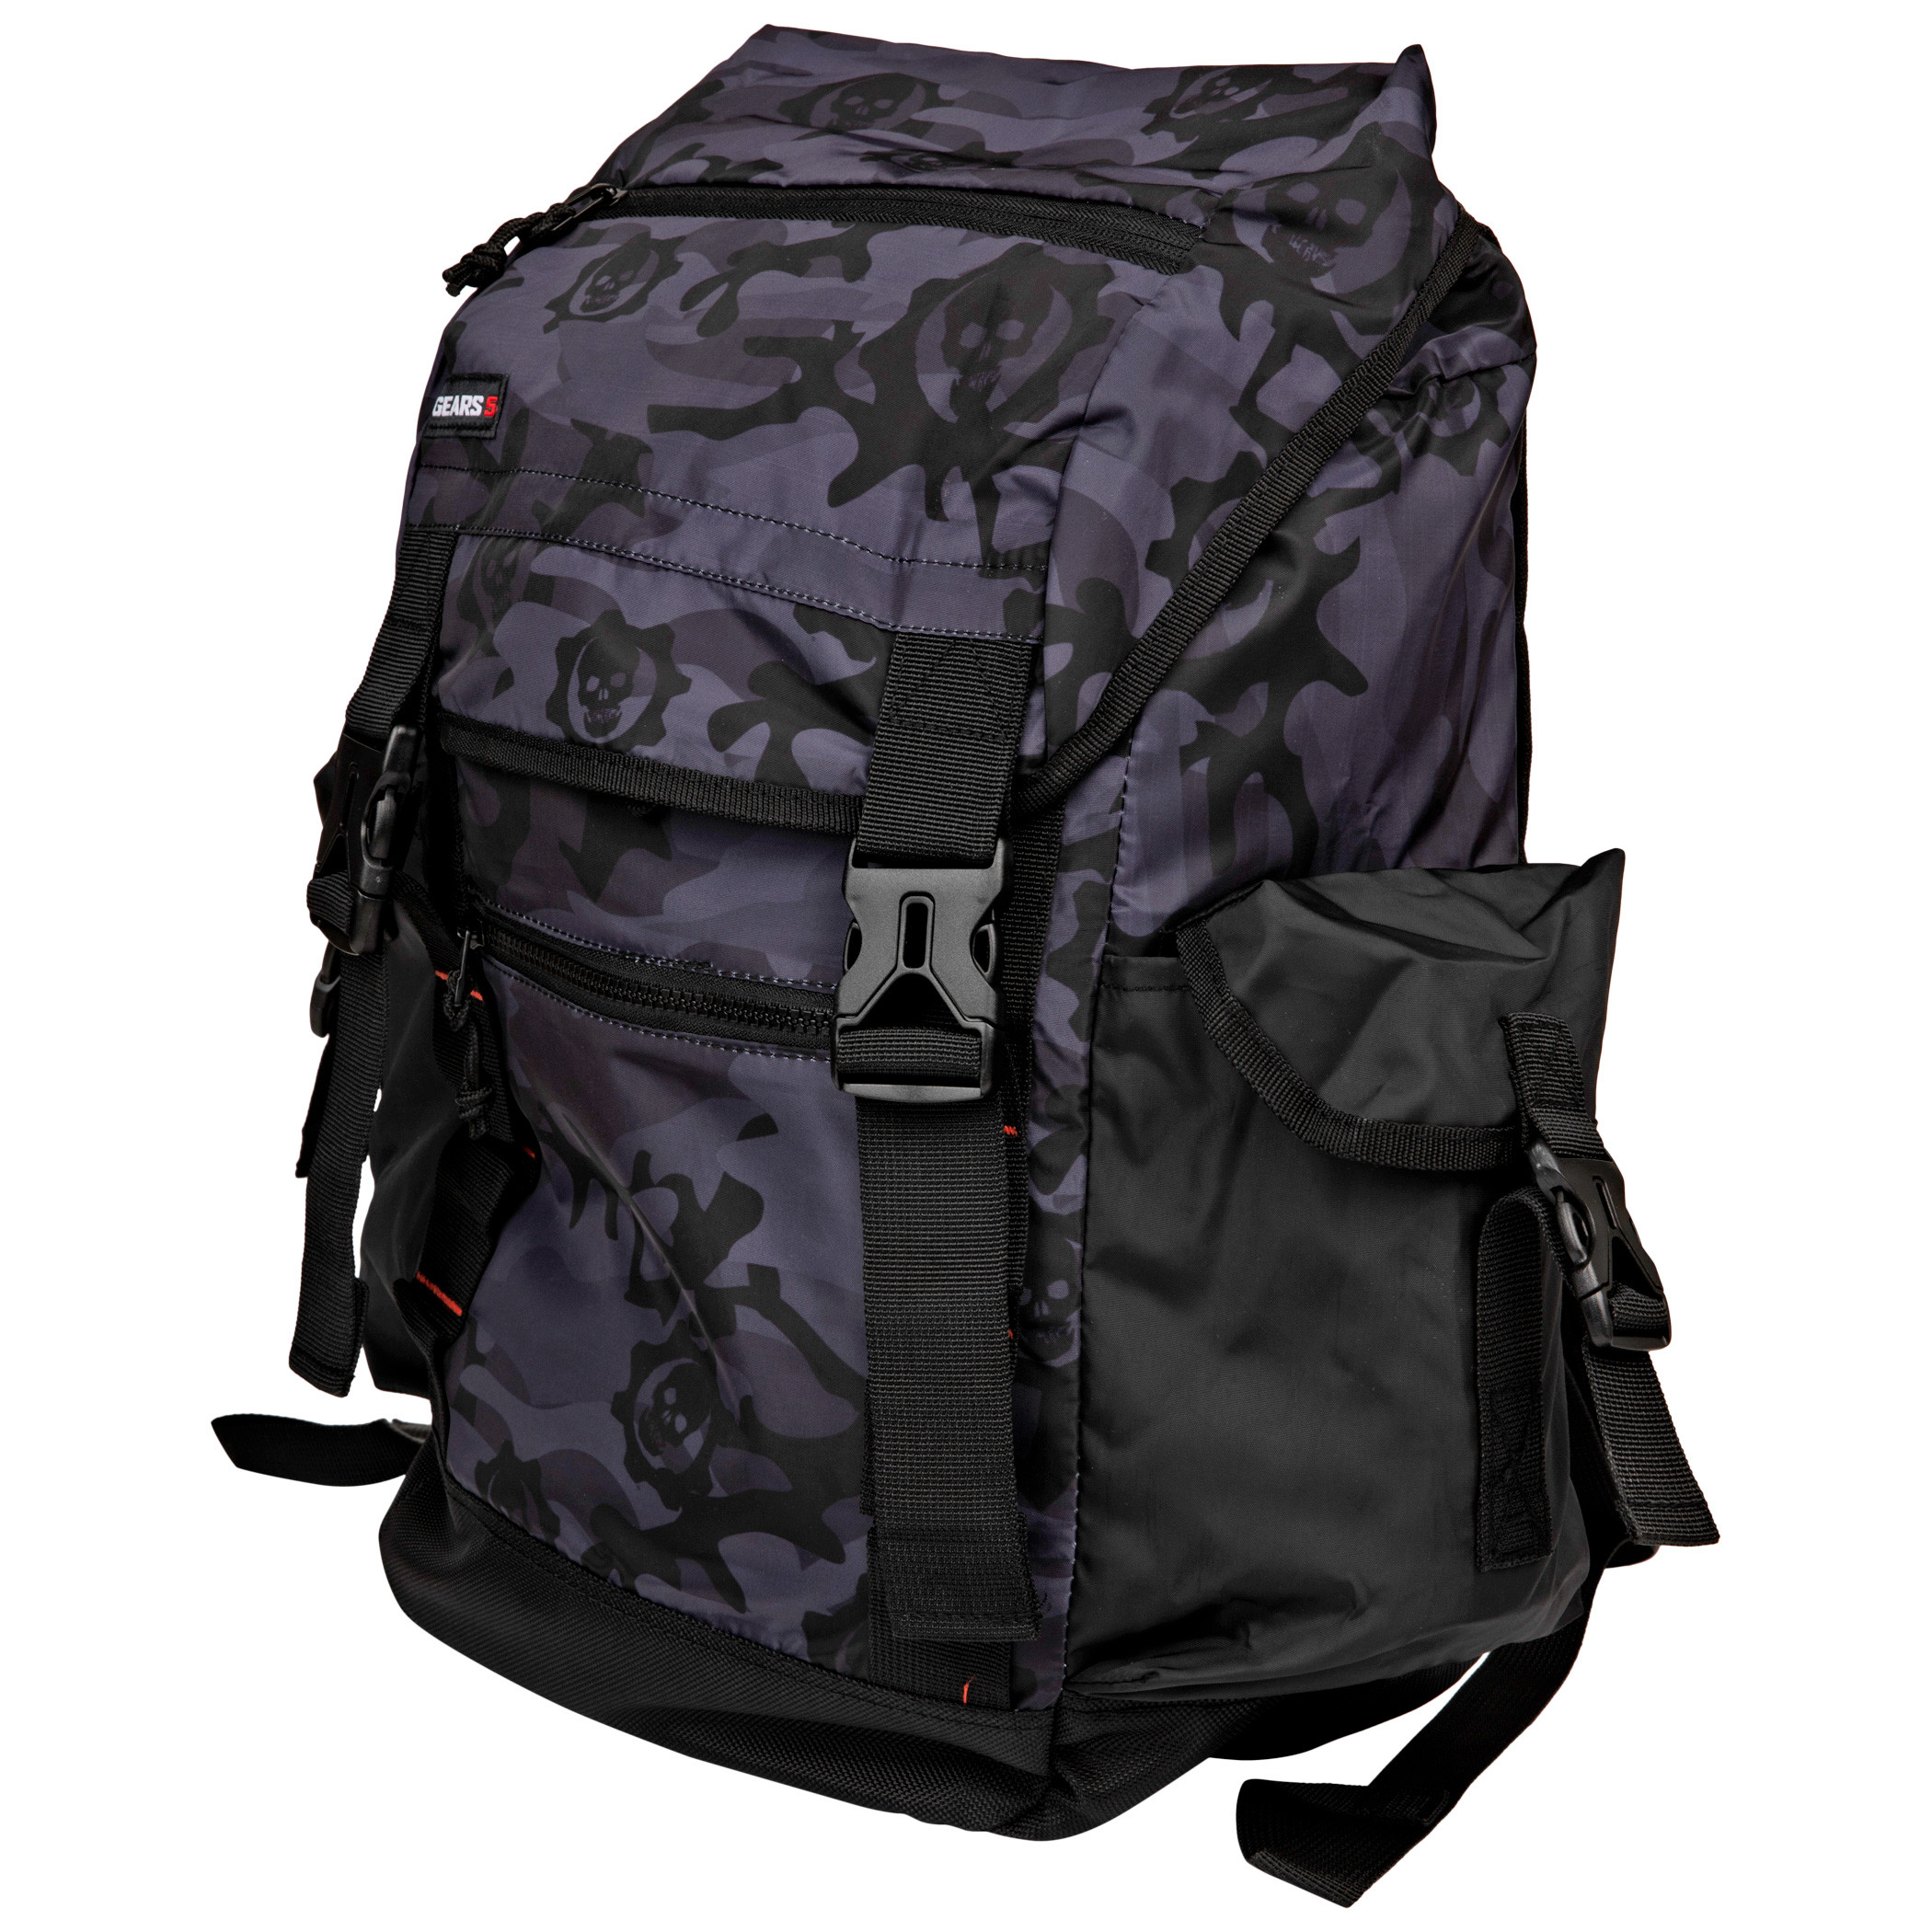 Gears of War Tactical Backpack